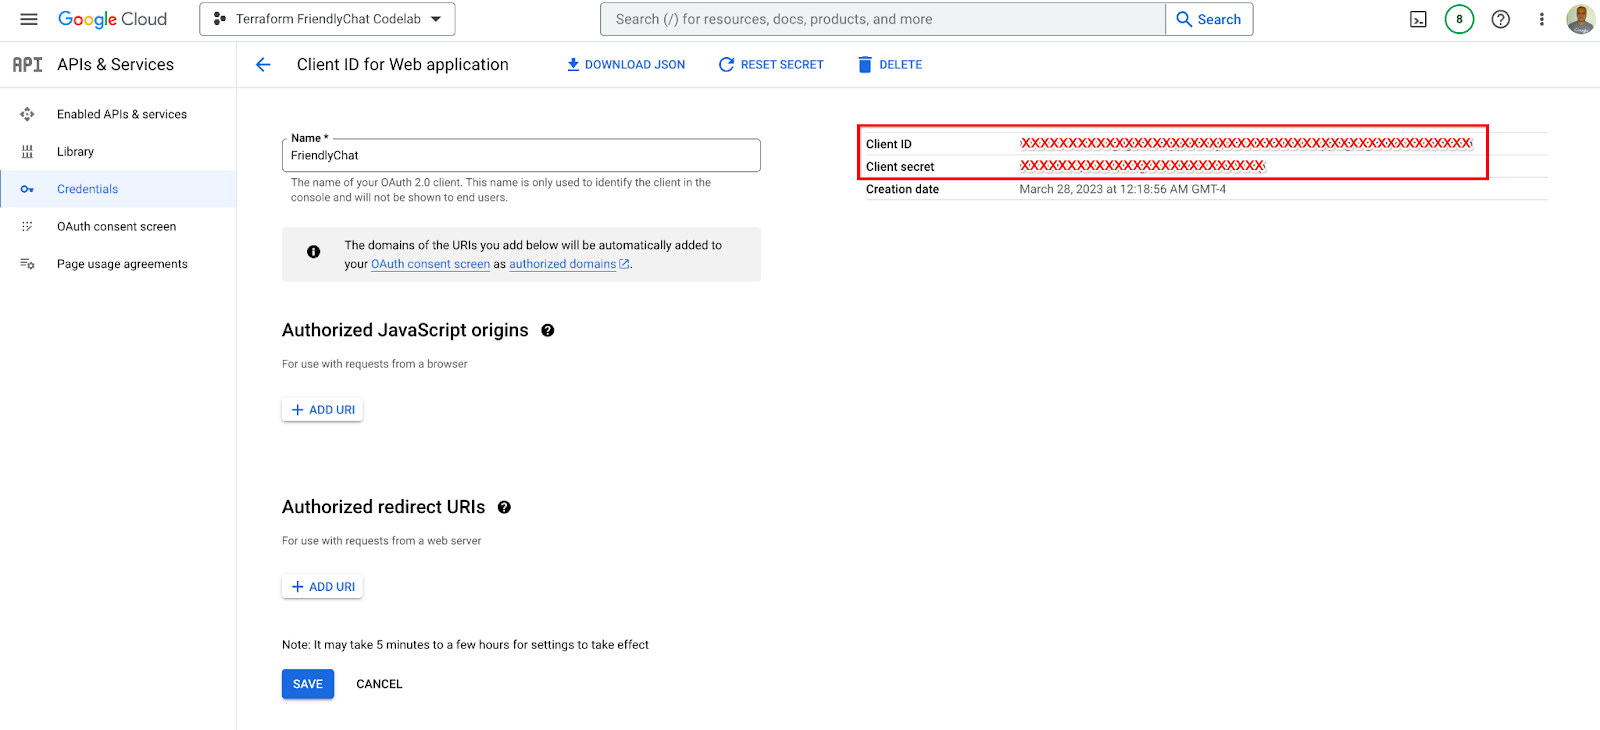 Mendapatkan Client ID dan rahasia OAuth2 dari halaman Credentials di Google Cloud Console